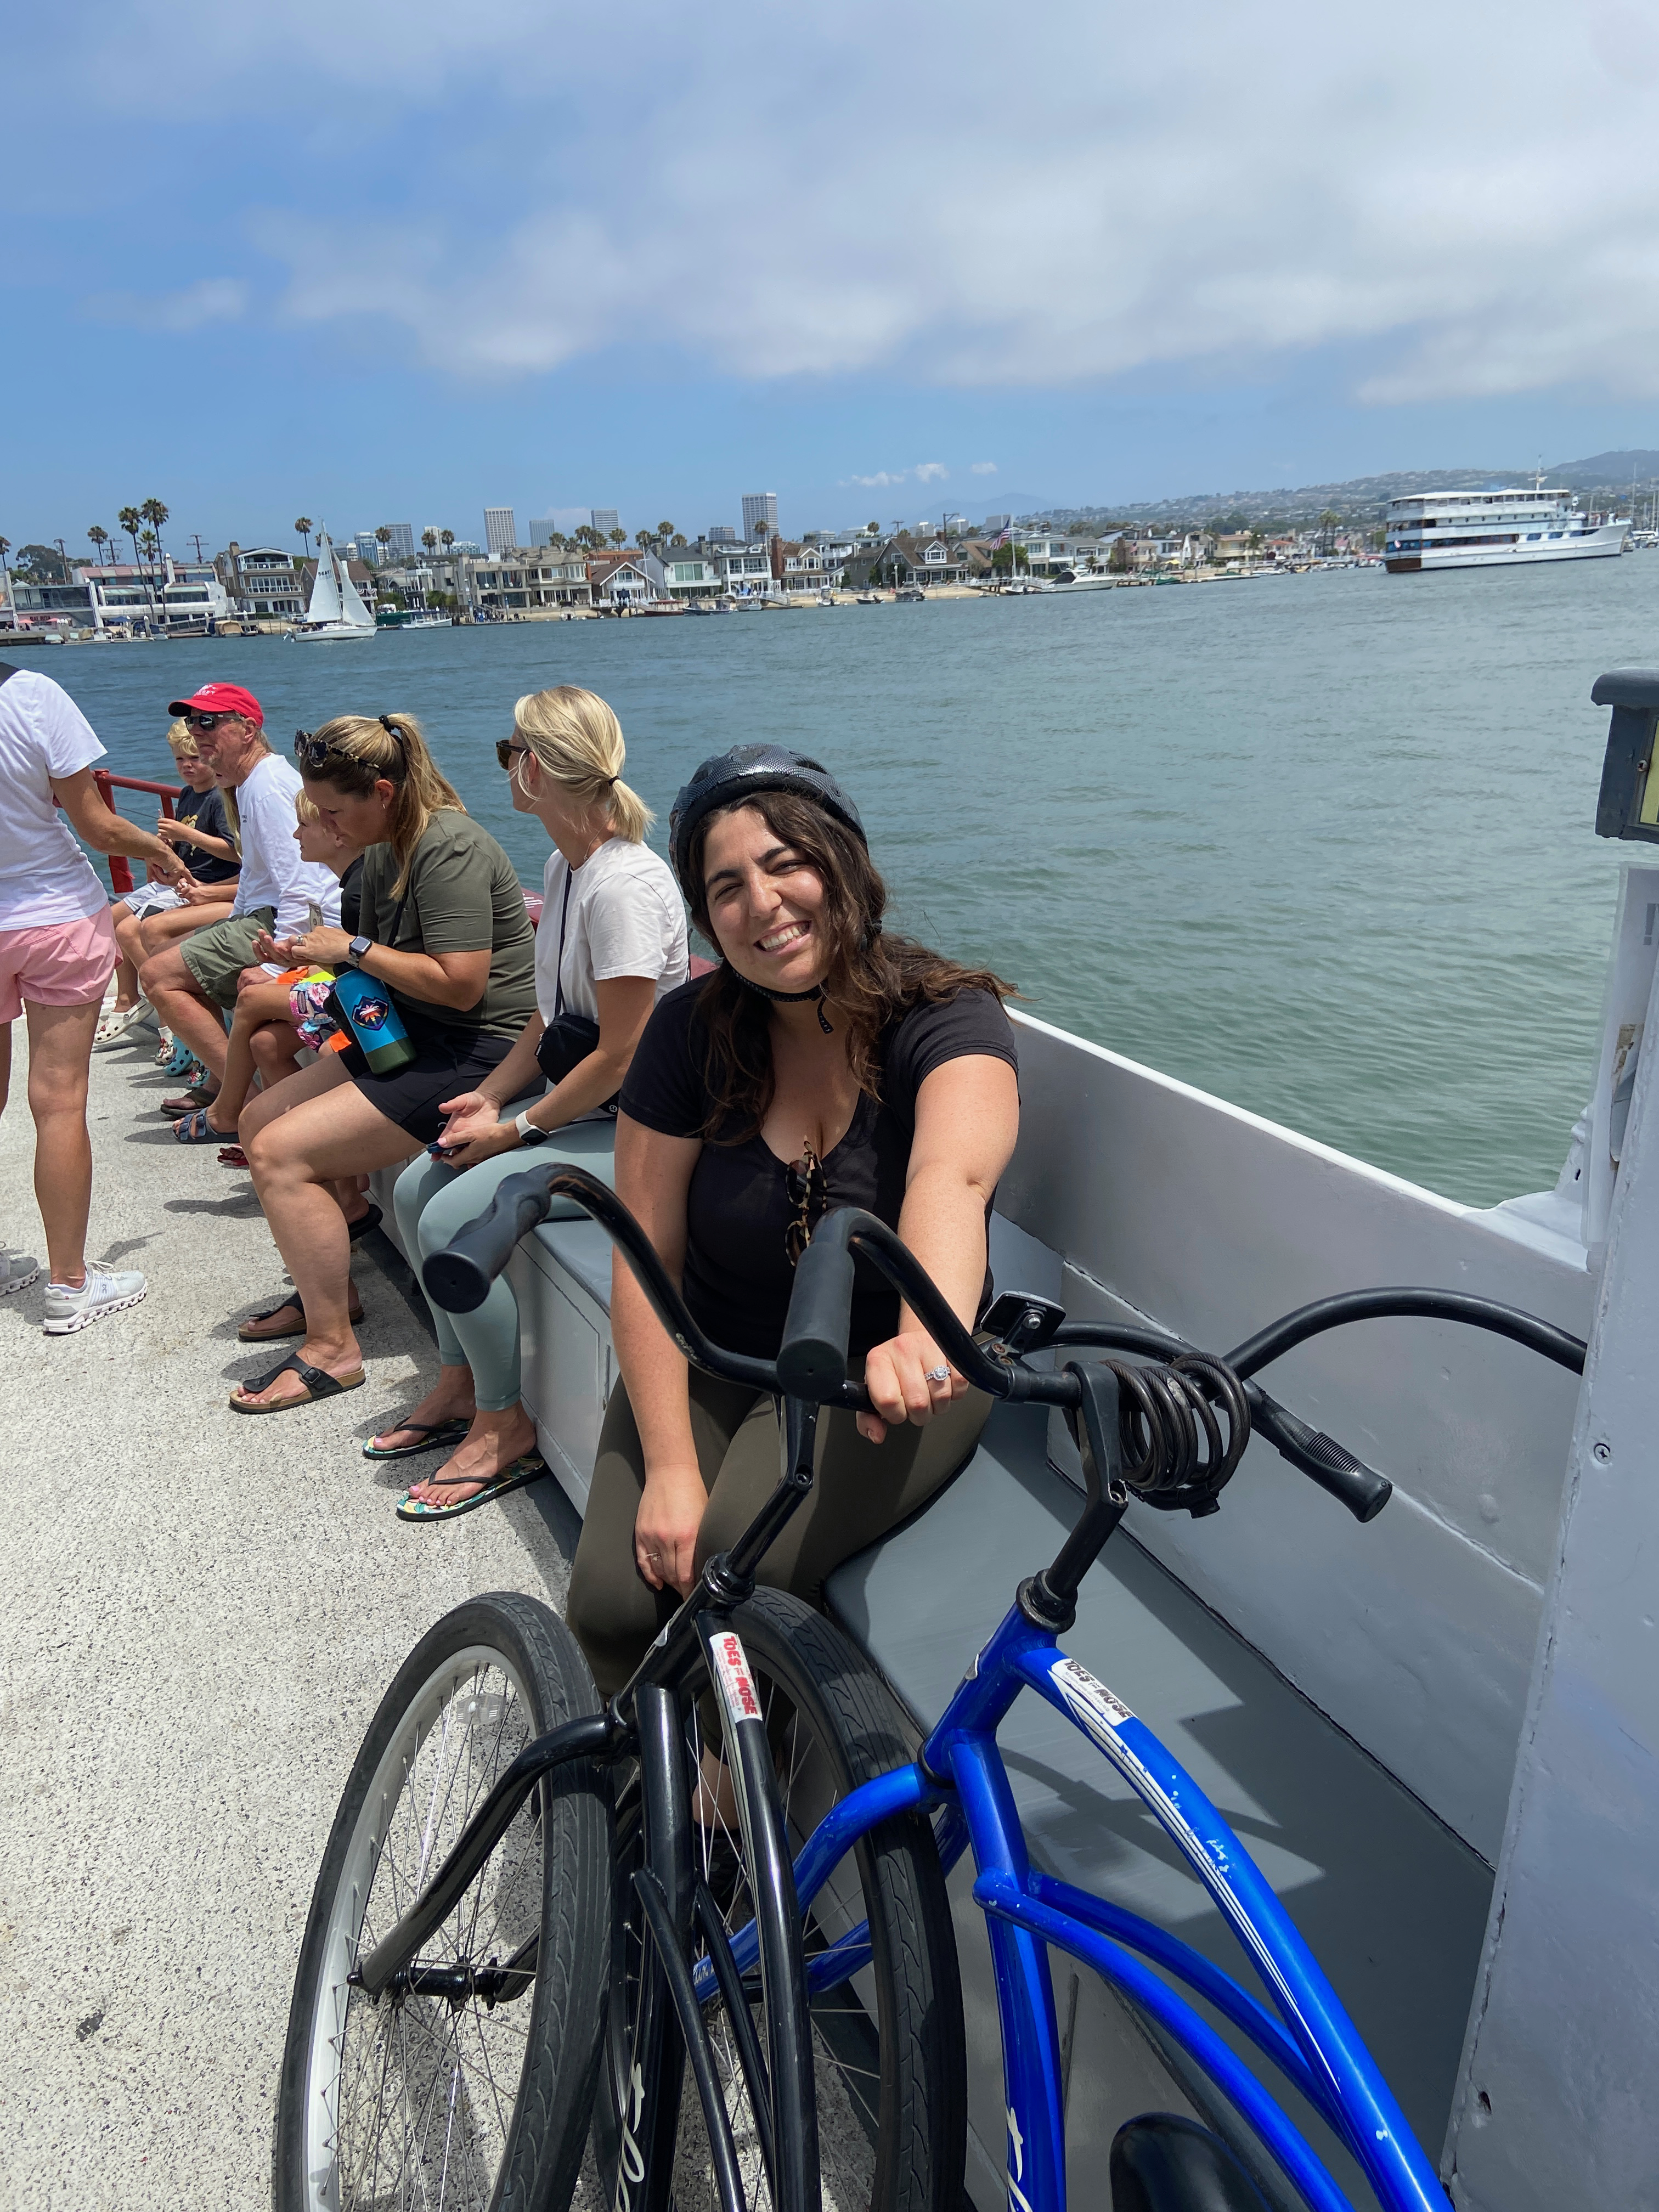 Balboa Island ferry passengers with bikes